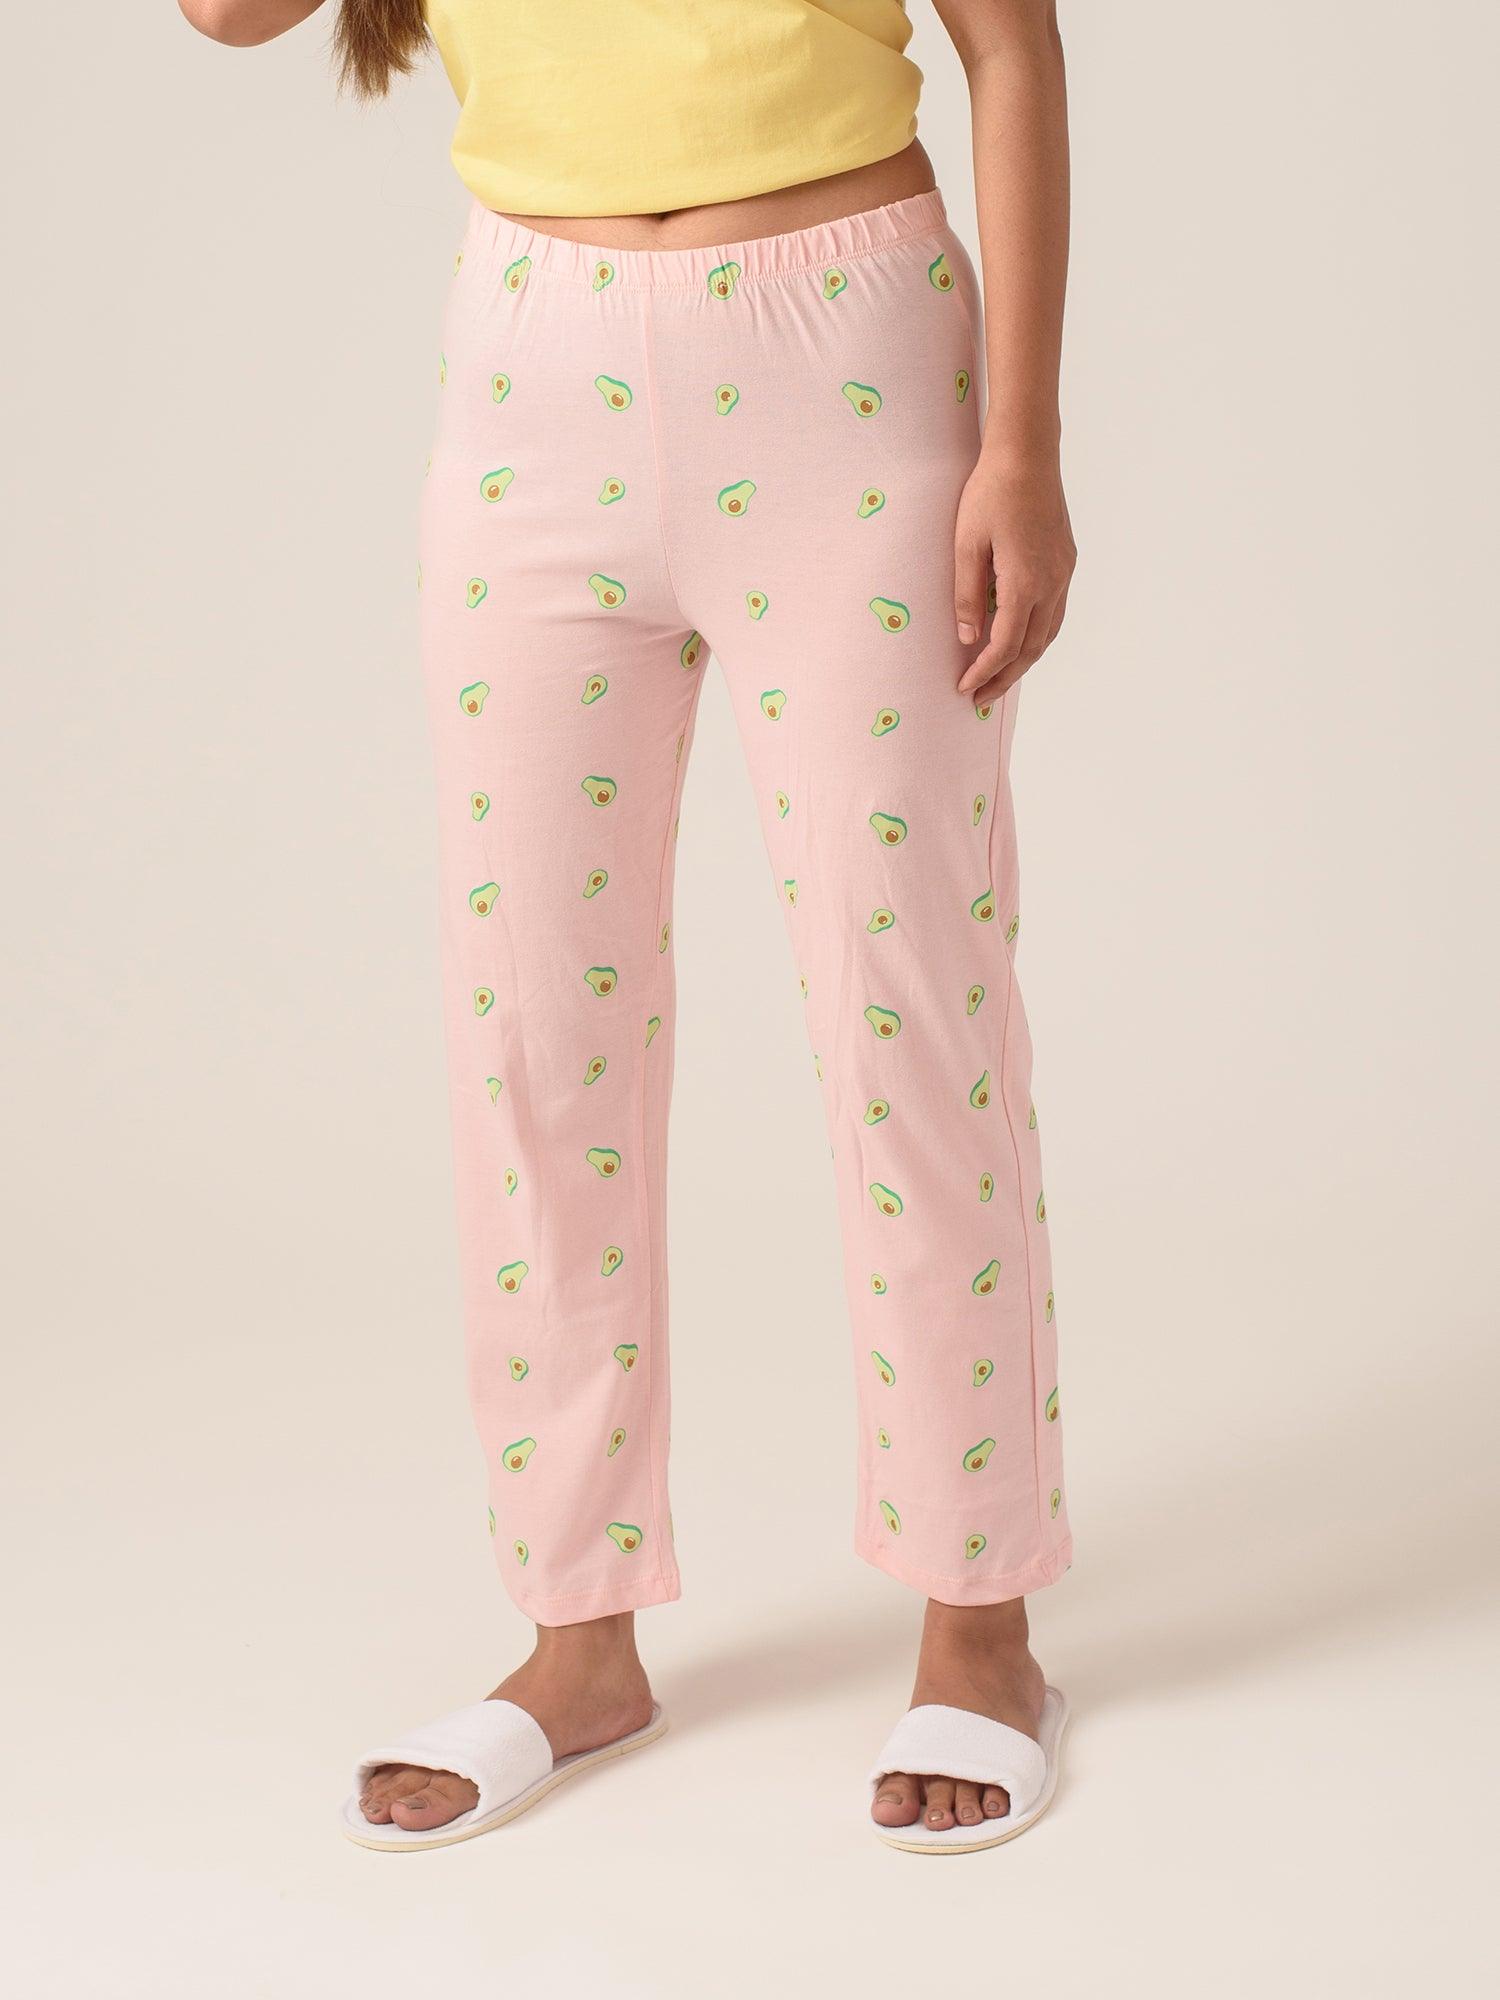 Let's Avocuddle Printed Cotton Pyjamas - soxytoes